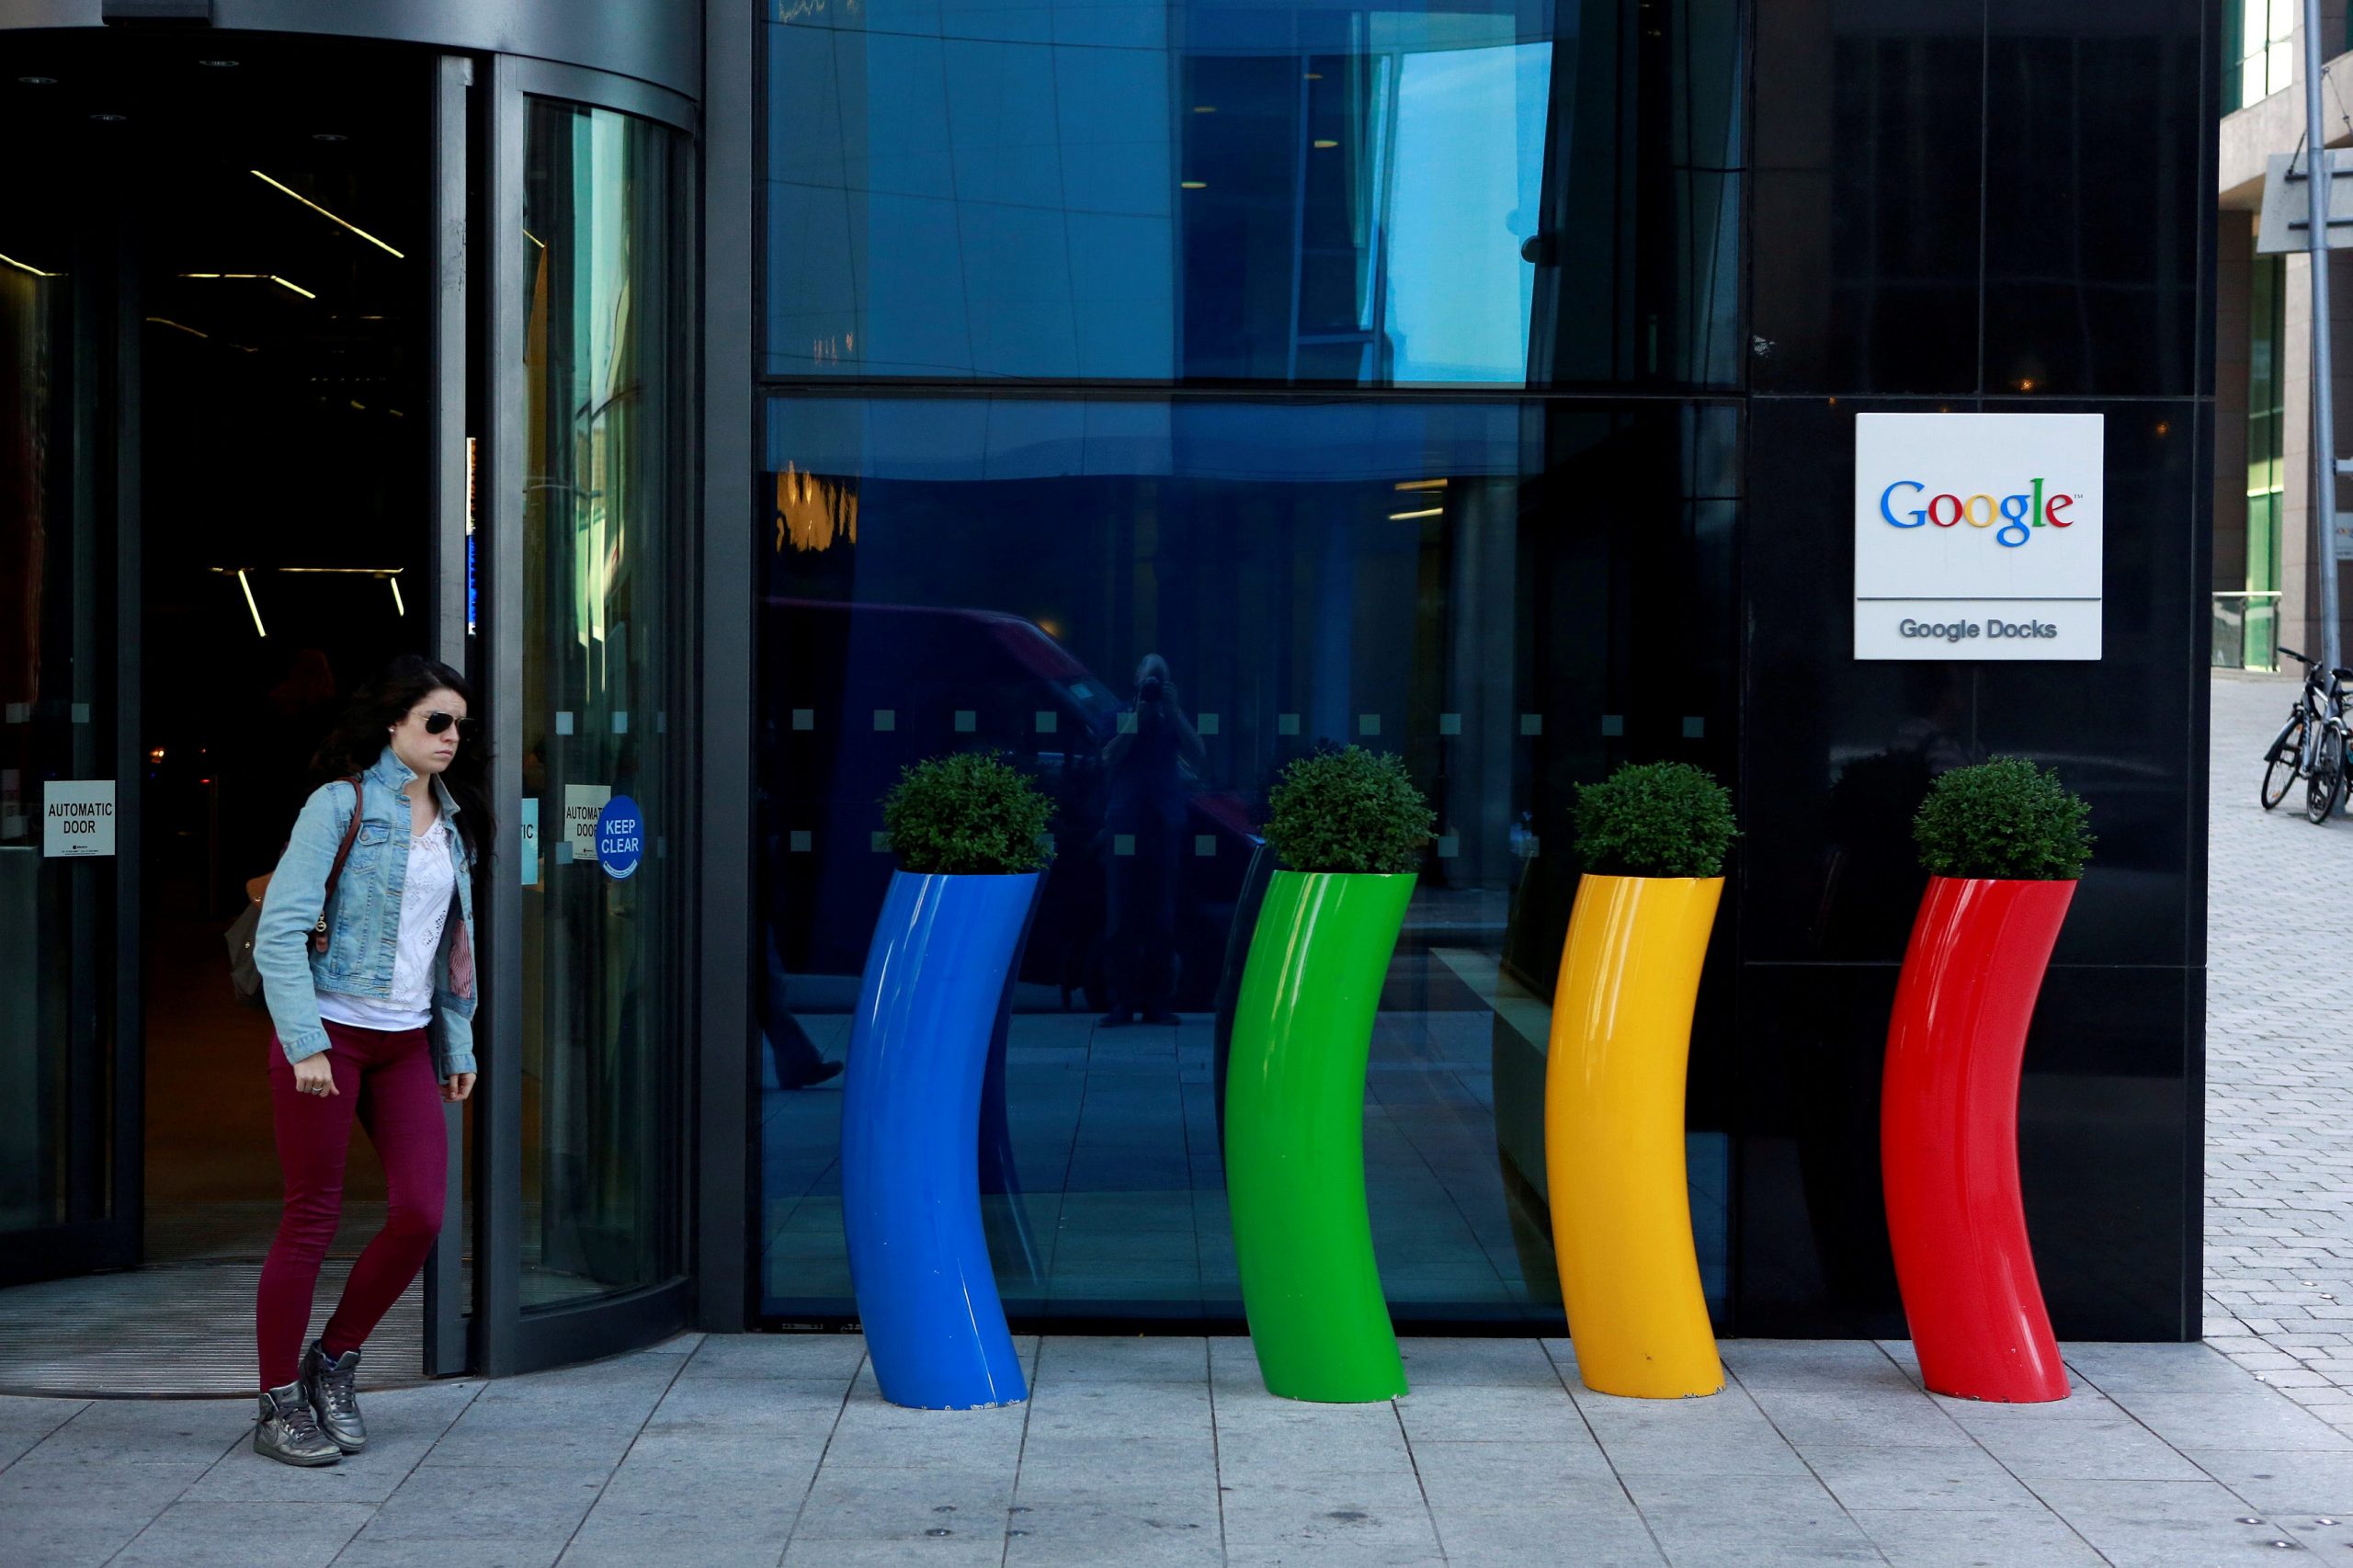 A woman wearing sunglasses exits Google's Dublin headquarters